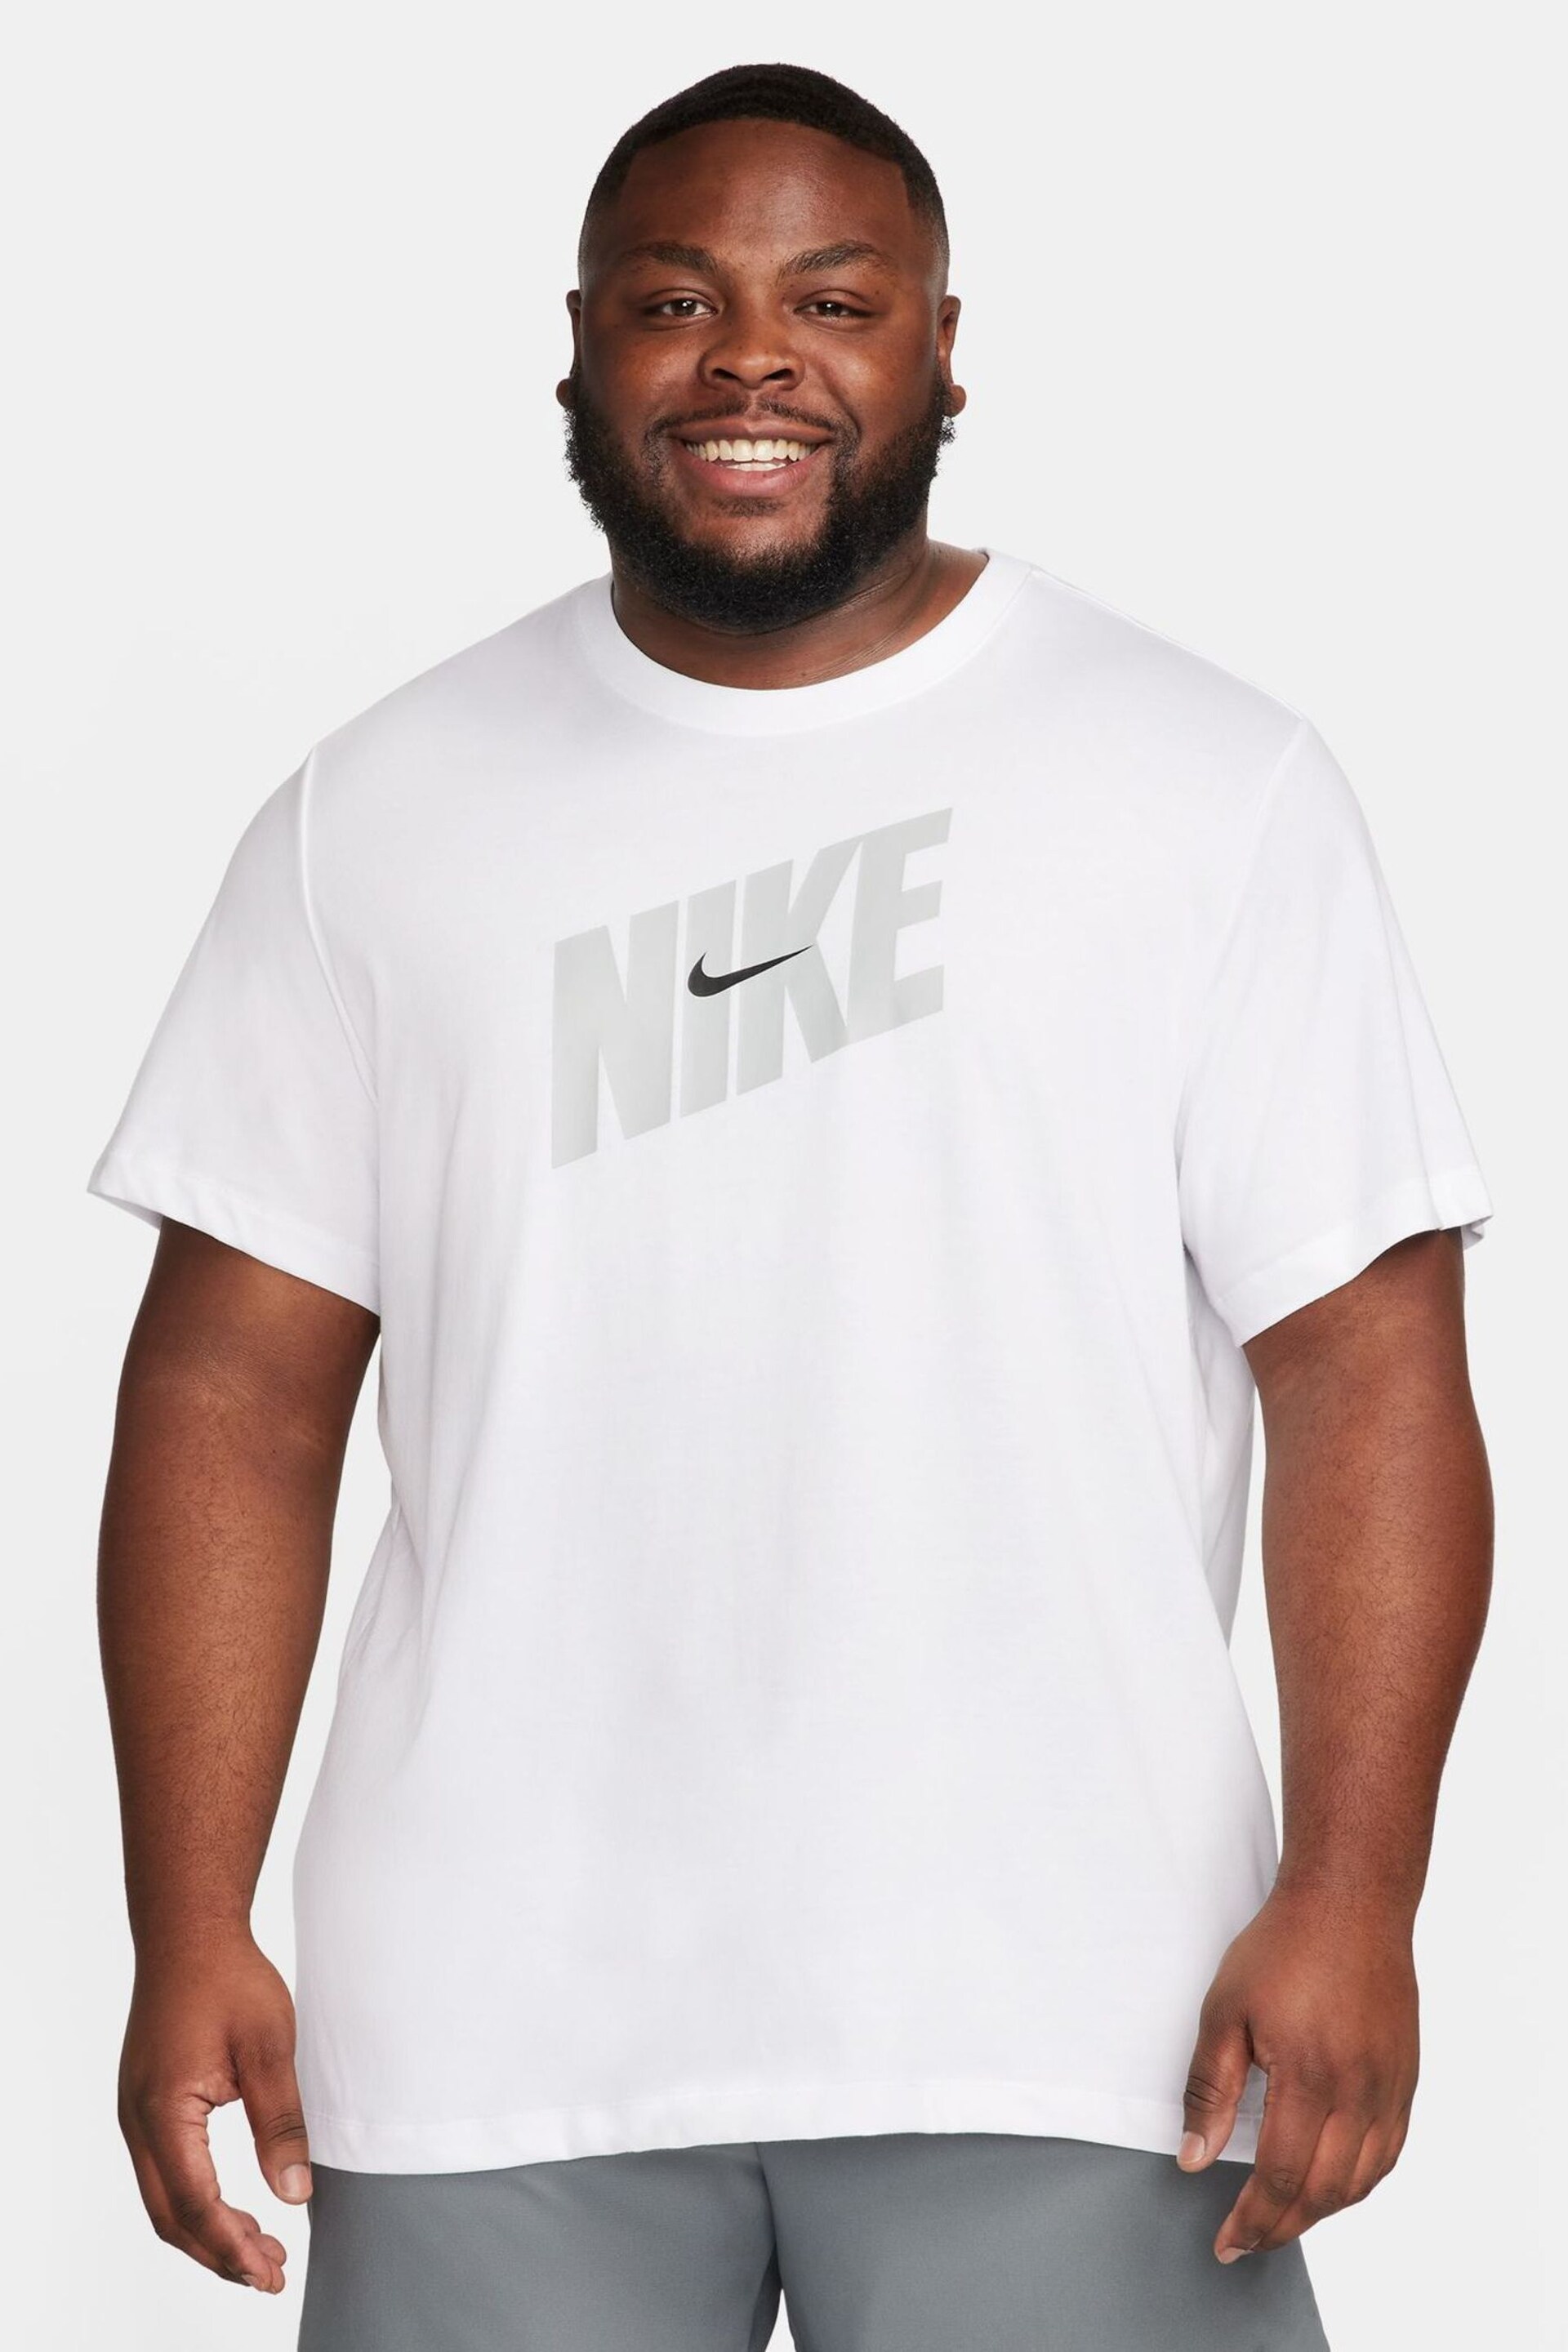 Nike White Dri-FIT Training T-Shirt - Image 1 of 5